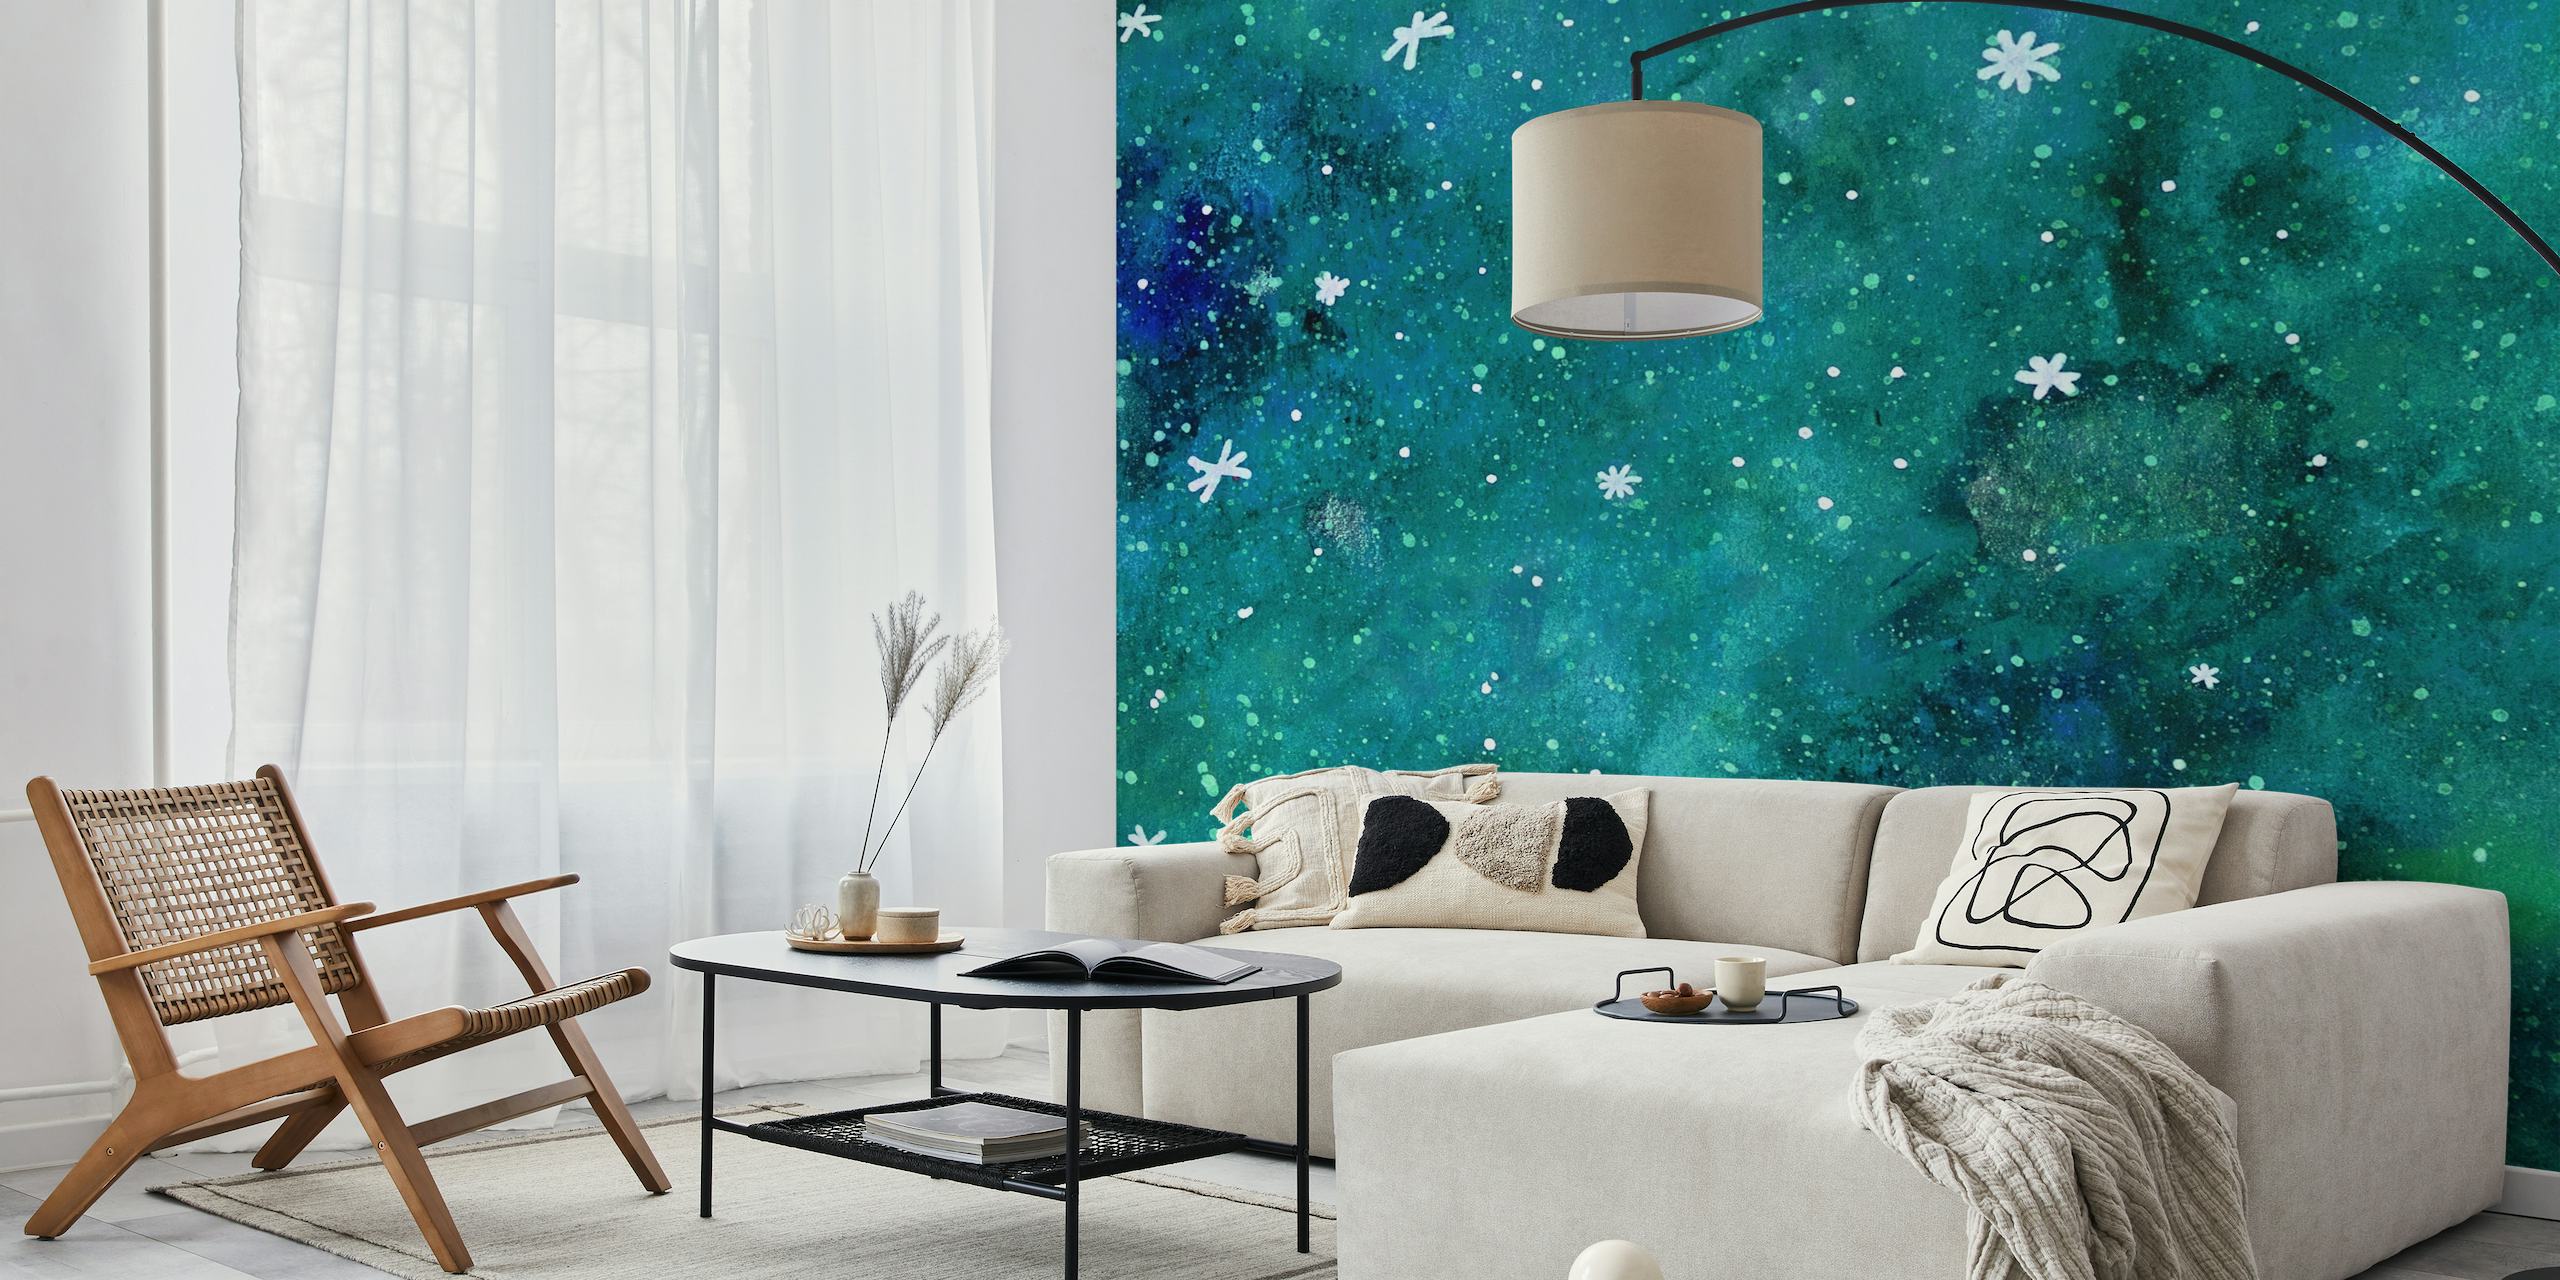 Teal galaxy sky papel pintado